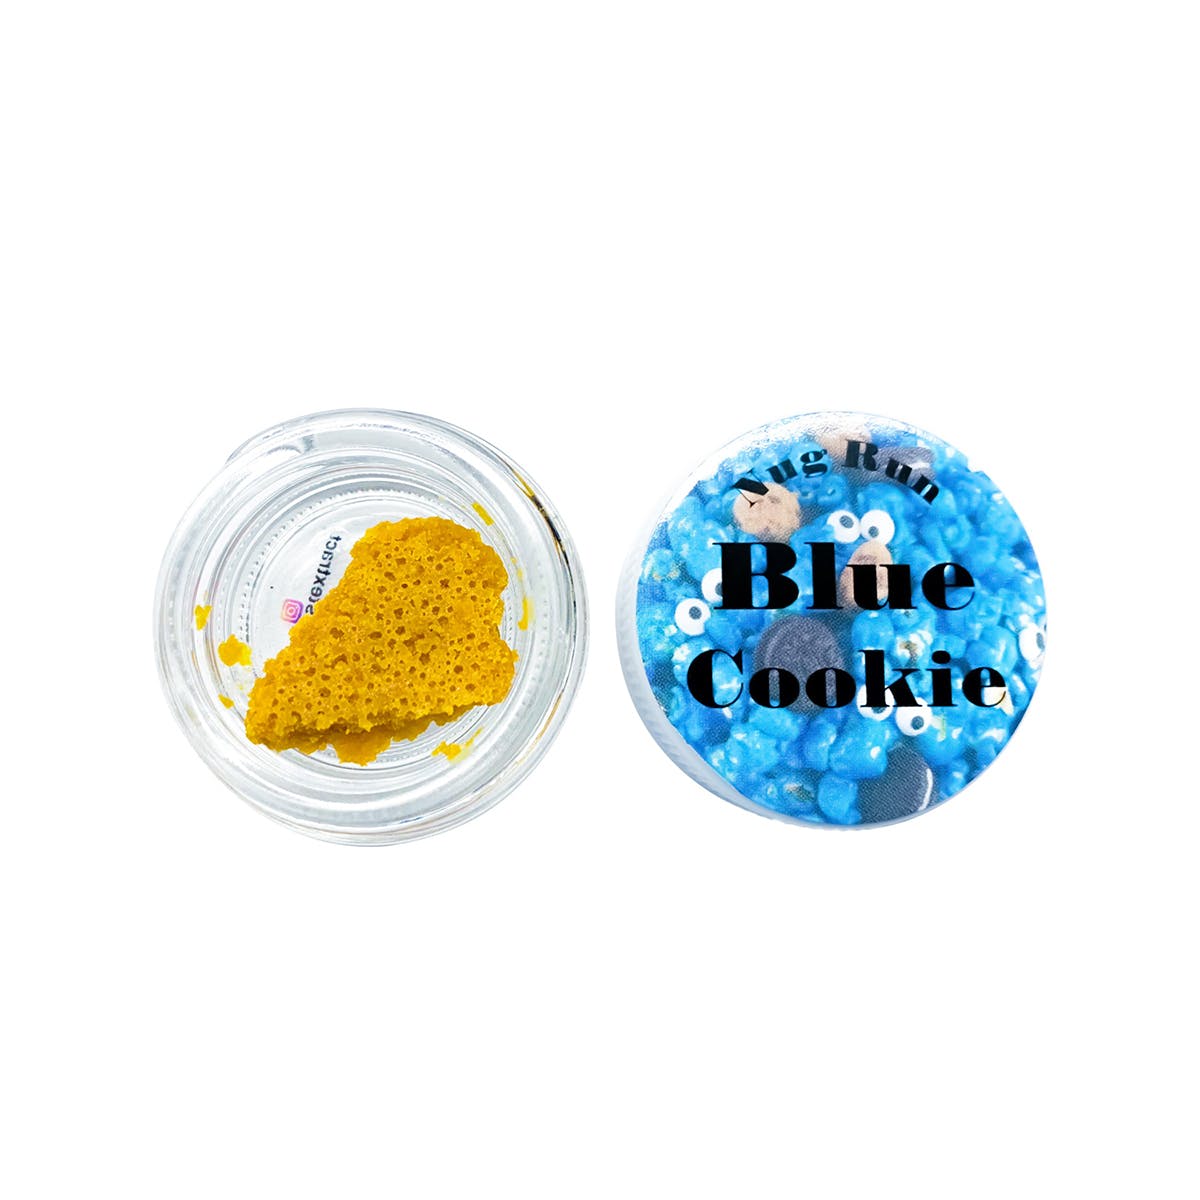 Blue Cookies Crumble - Nug Run